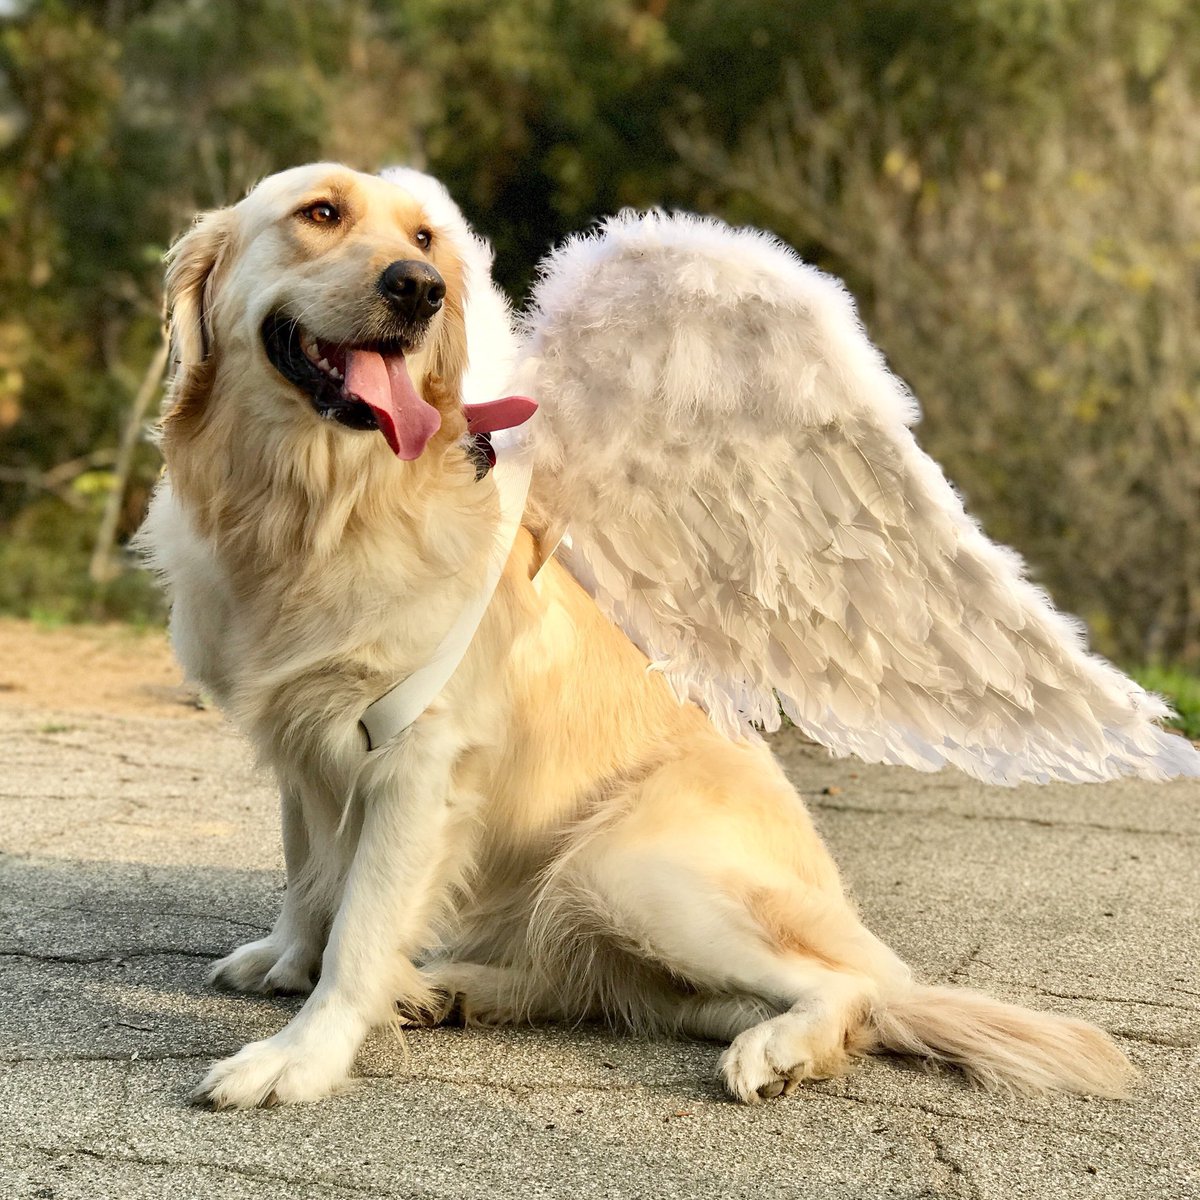 golden retriever with angel wings looking heavenly as heck